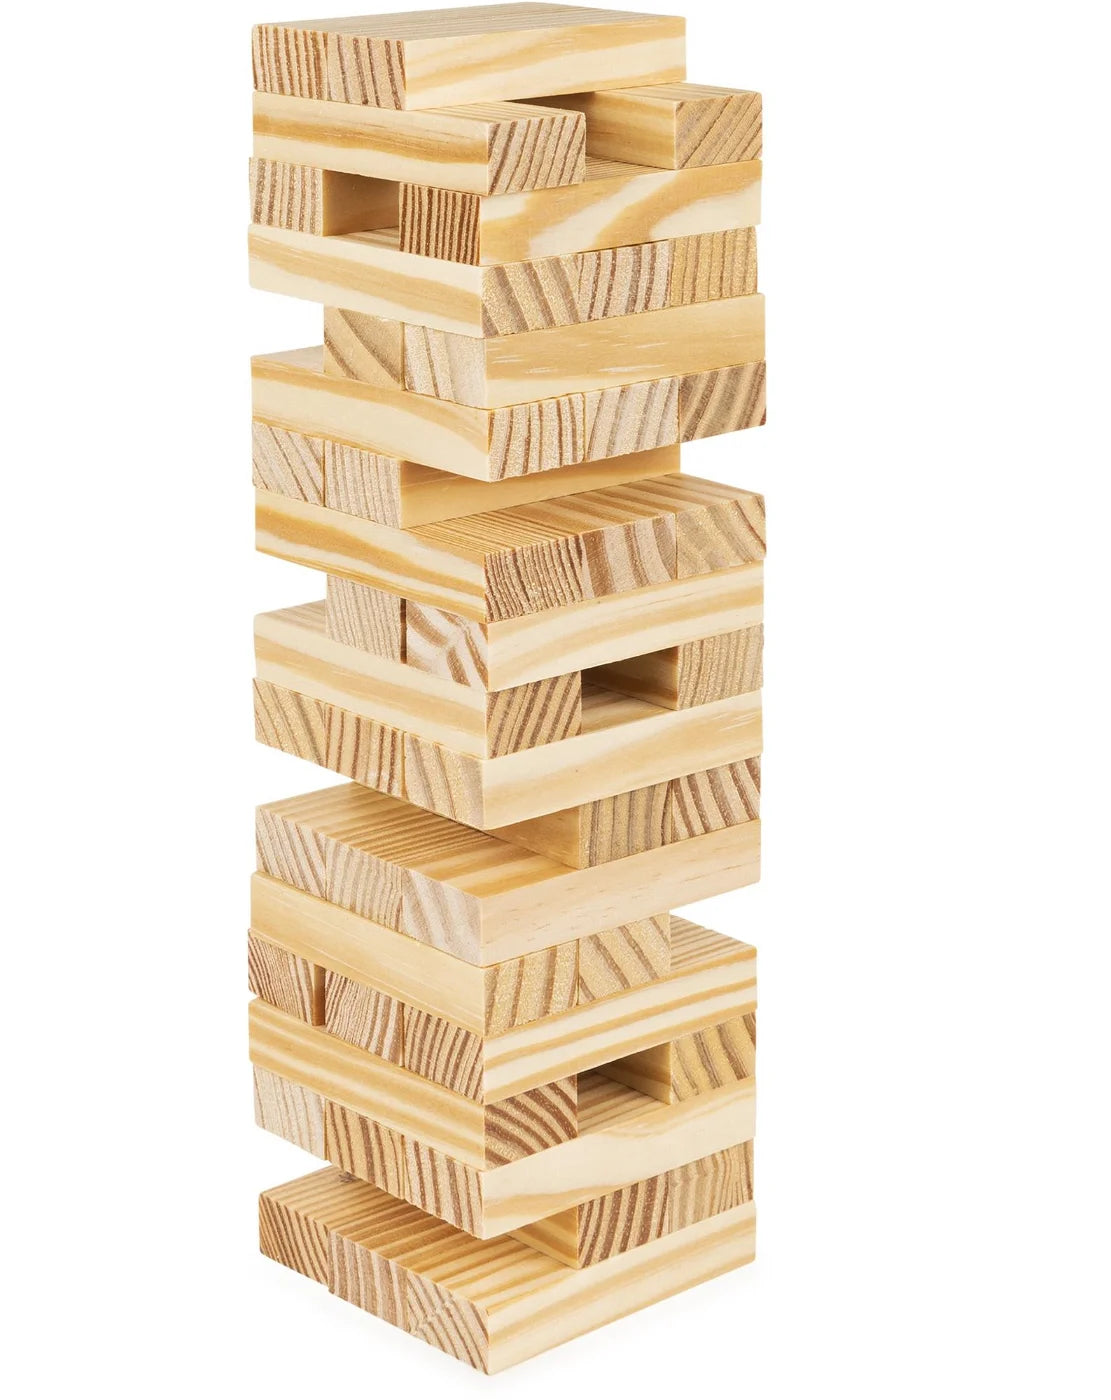 Game Jumbling Towers Wood In Shoe Box